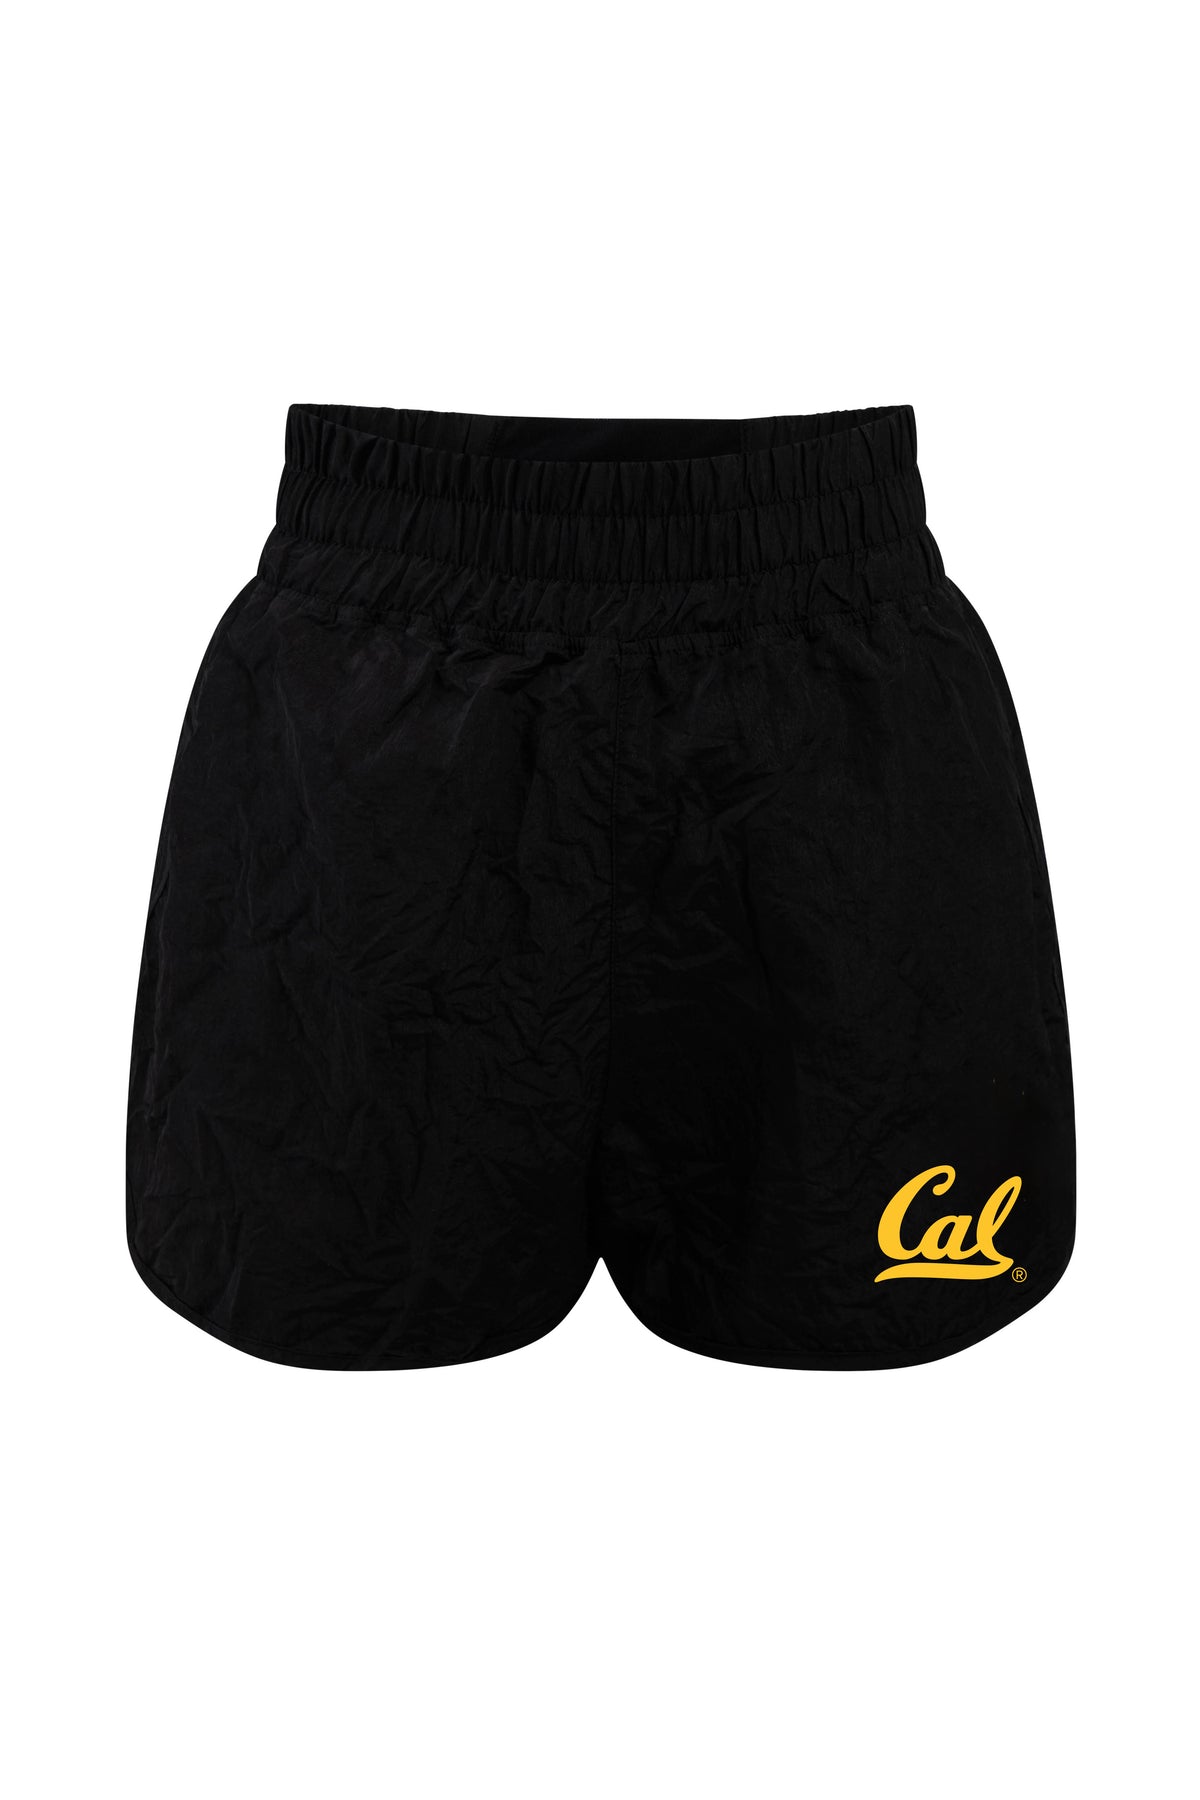 University of California Berkeley Boxer Short